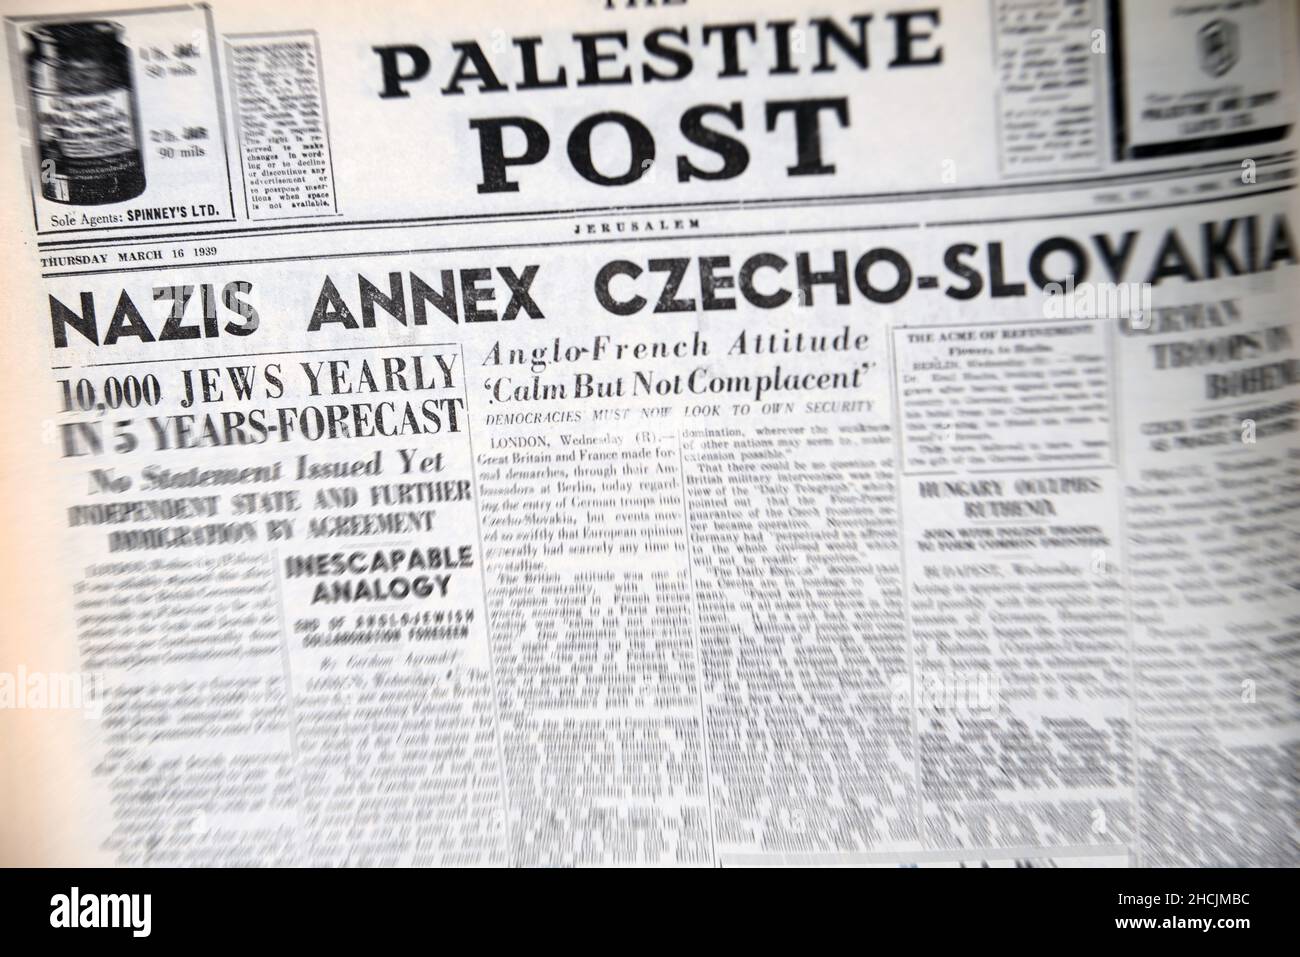 Headline from Israeli newspaper featuring an historical event - The Nazis annex Czechoslovakia Stock Photo